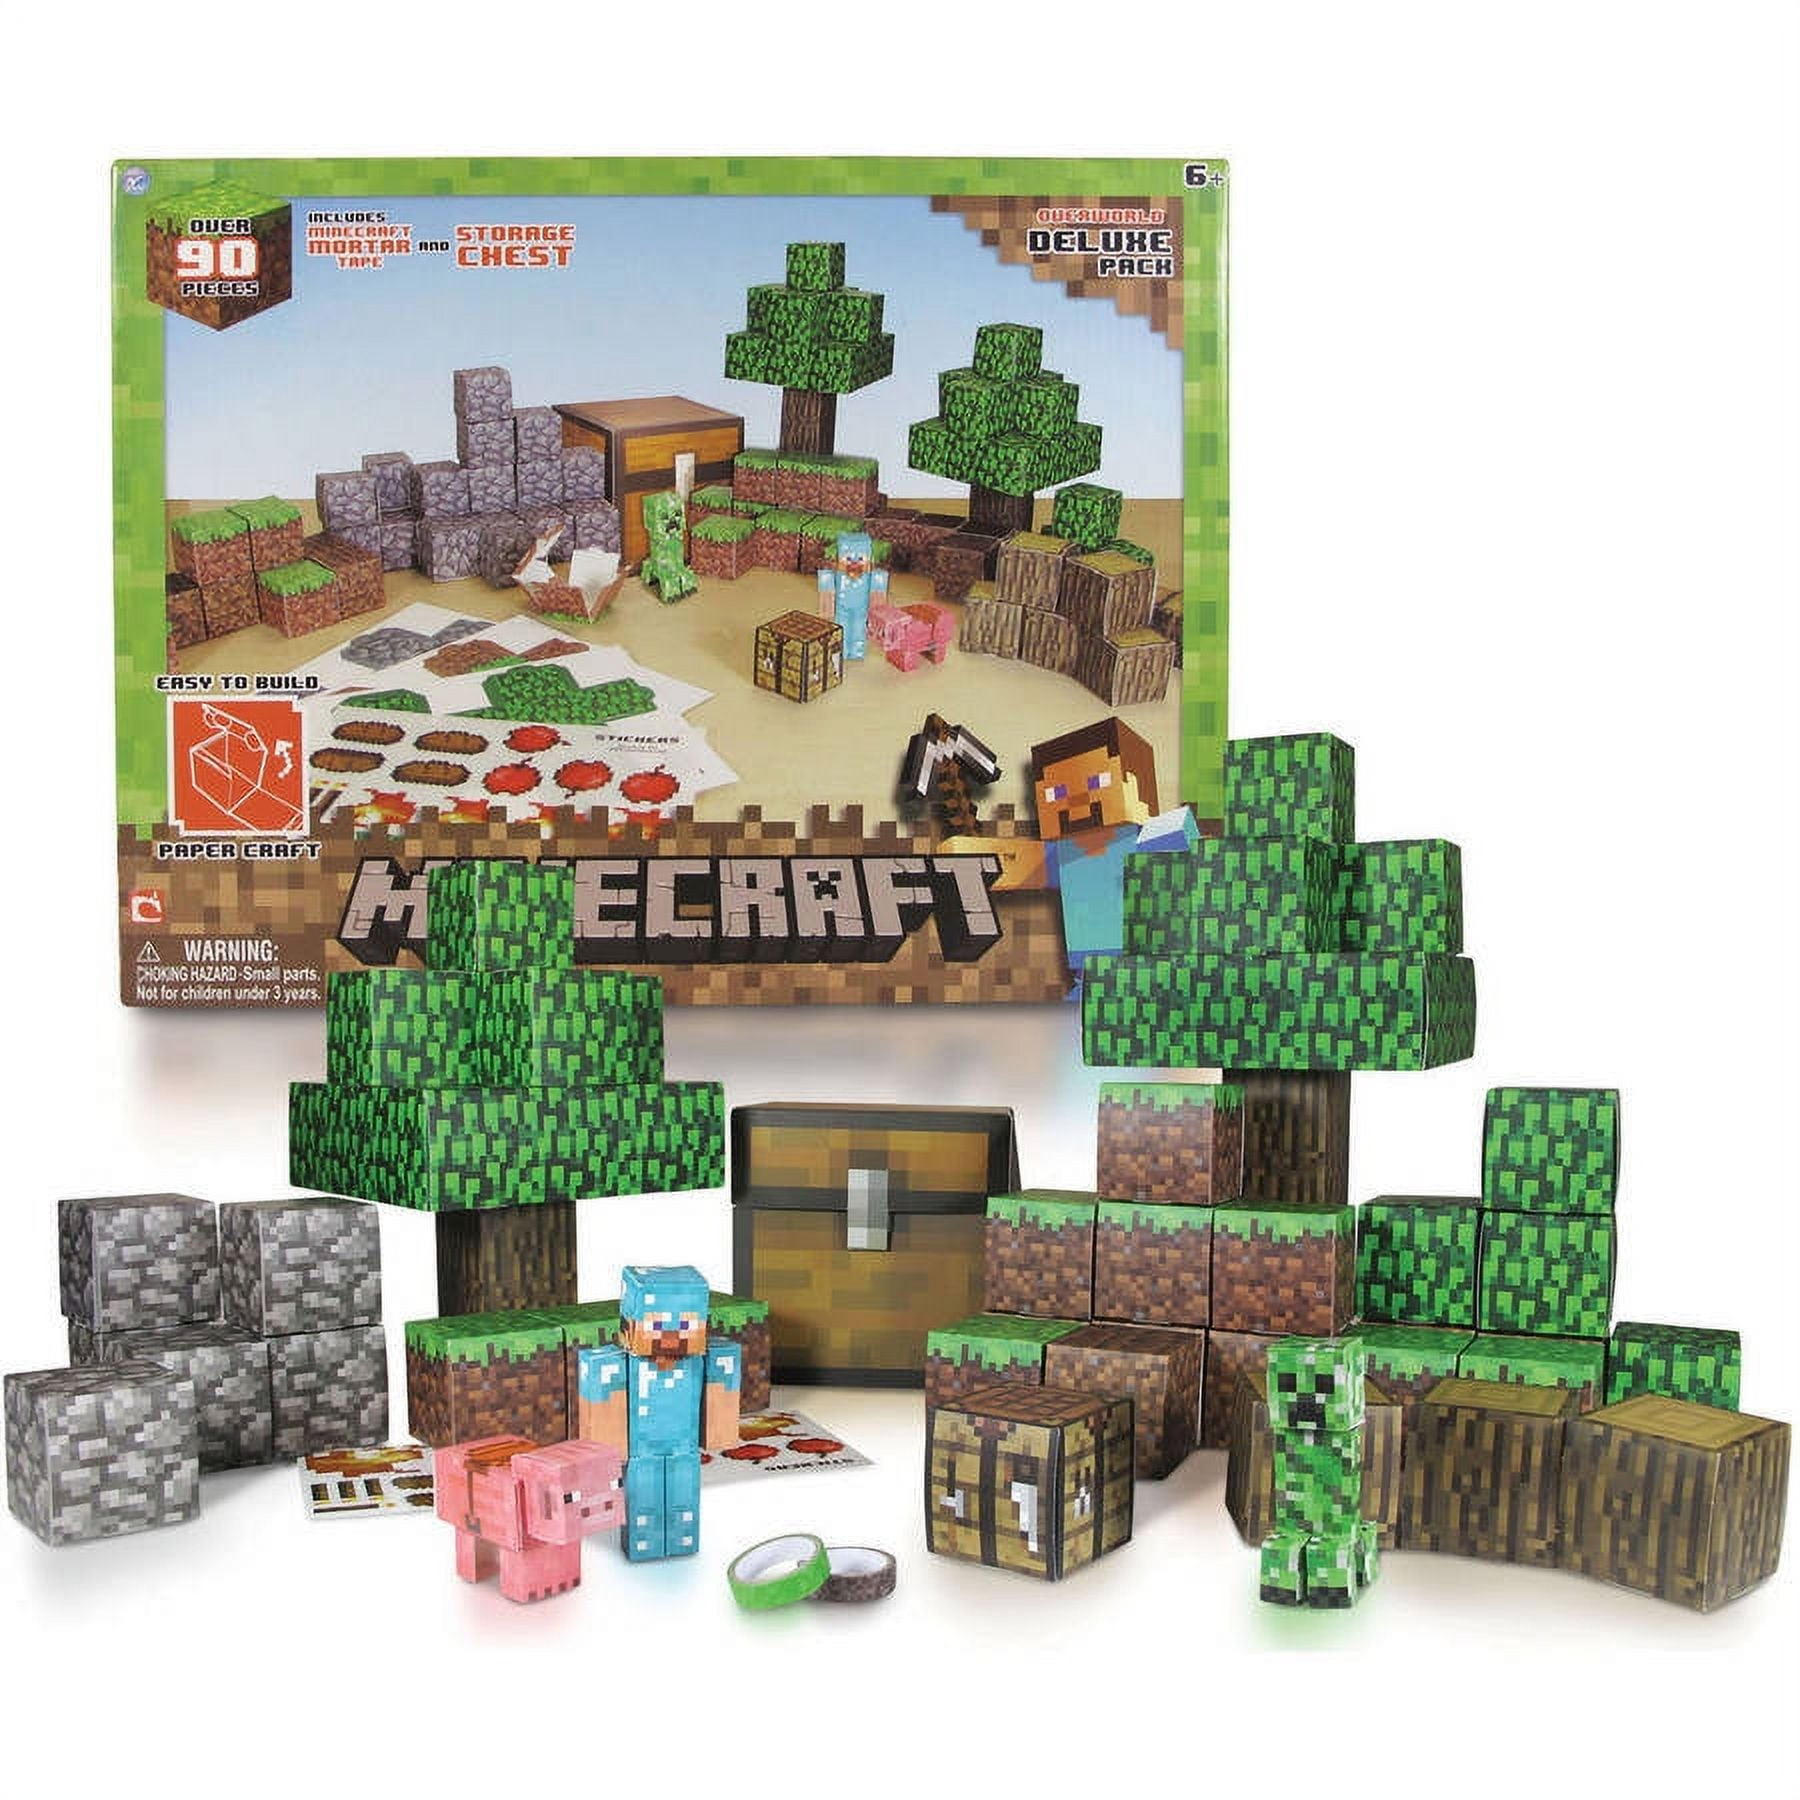  Minecraft Papercraft Hostile Mobs Set, Over 30 Piece : Toys &  Games